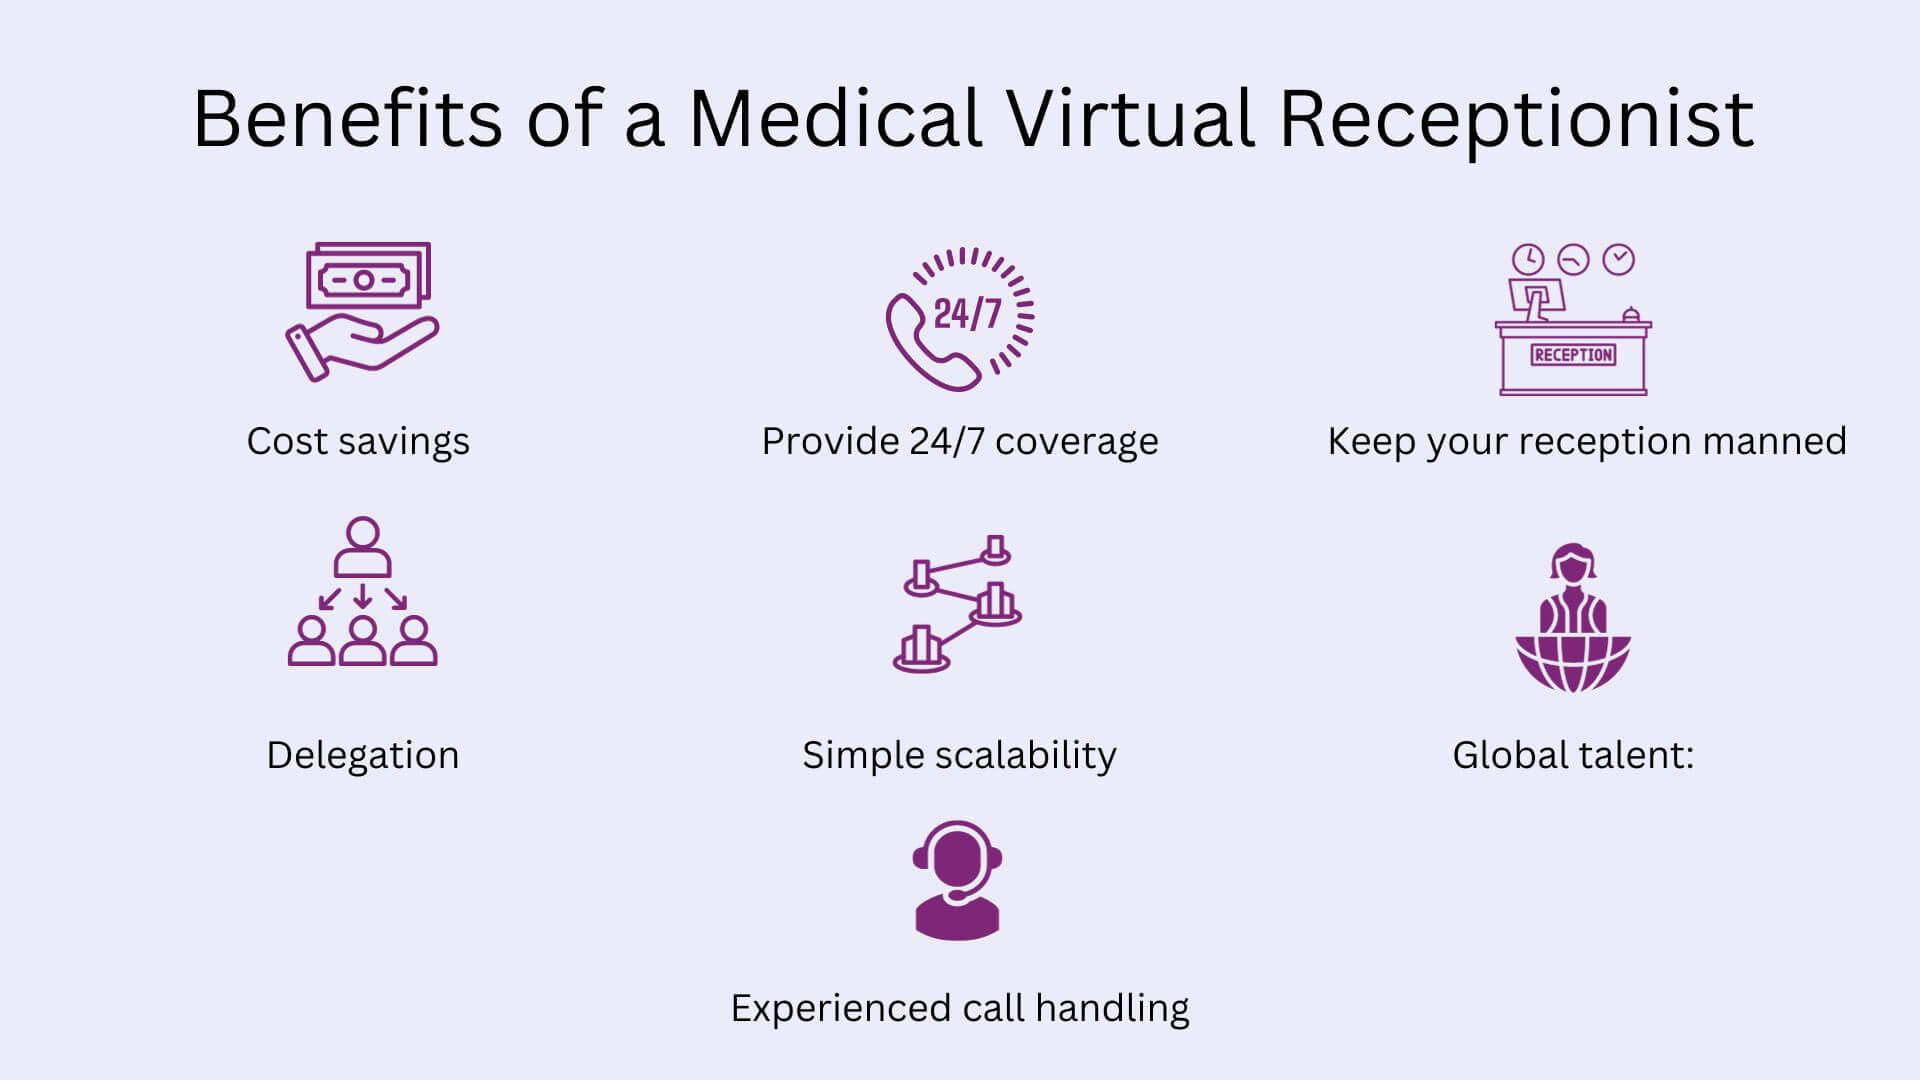 Benefits of a Medical Virtual Receptionist